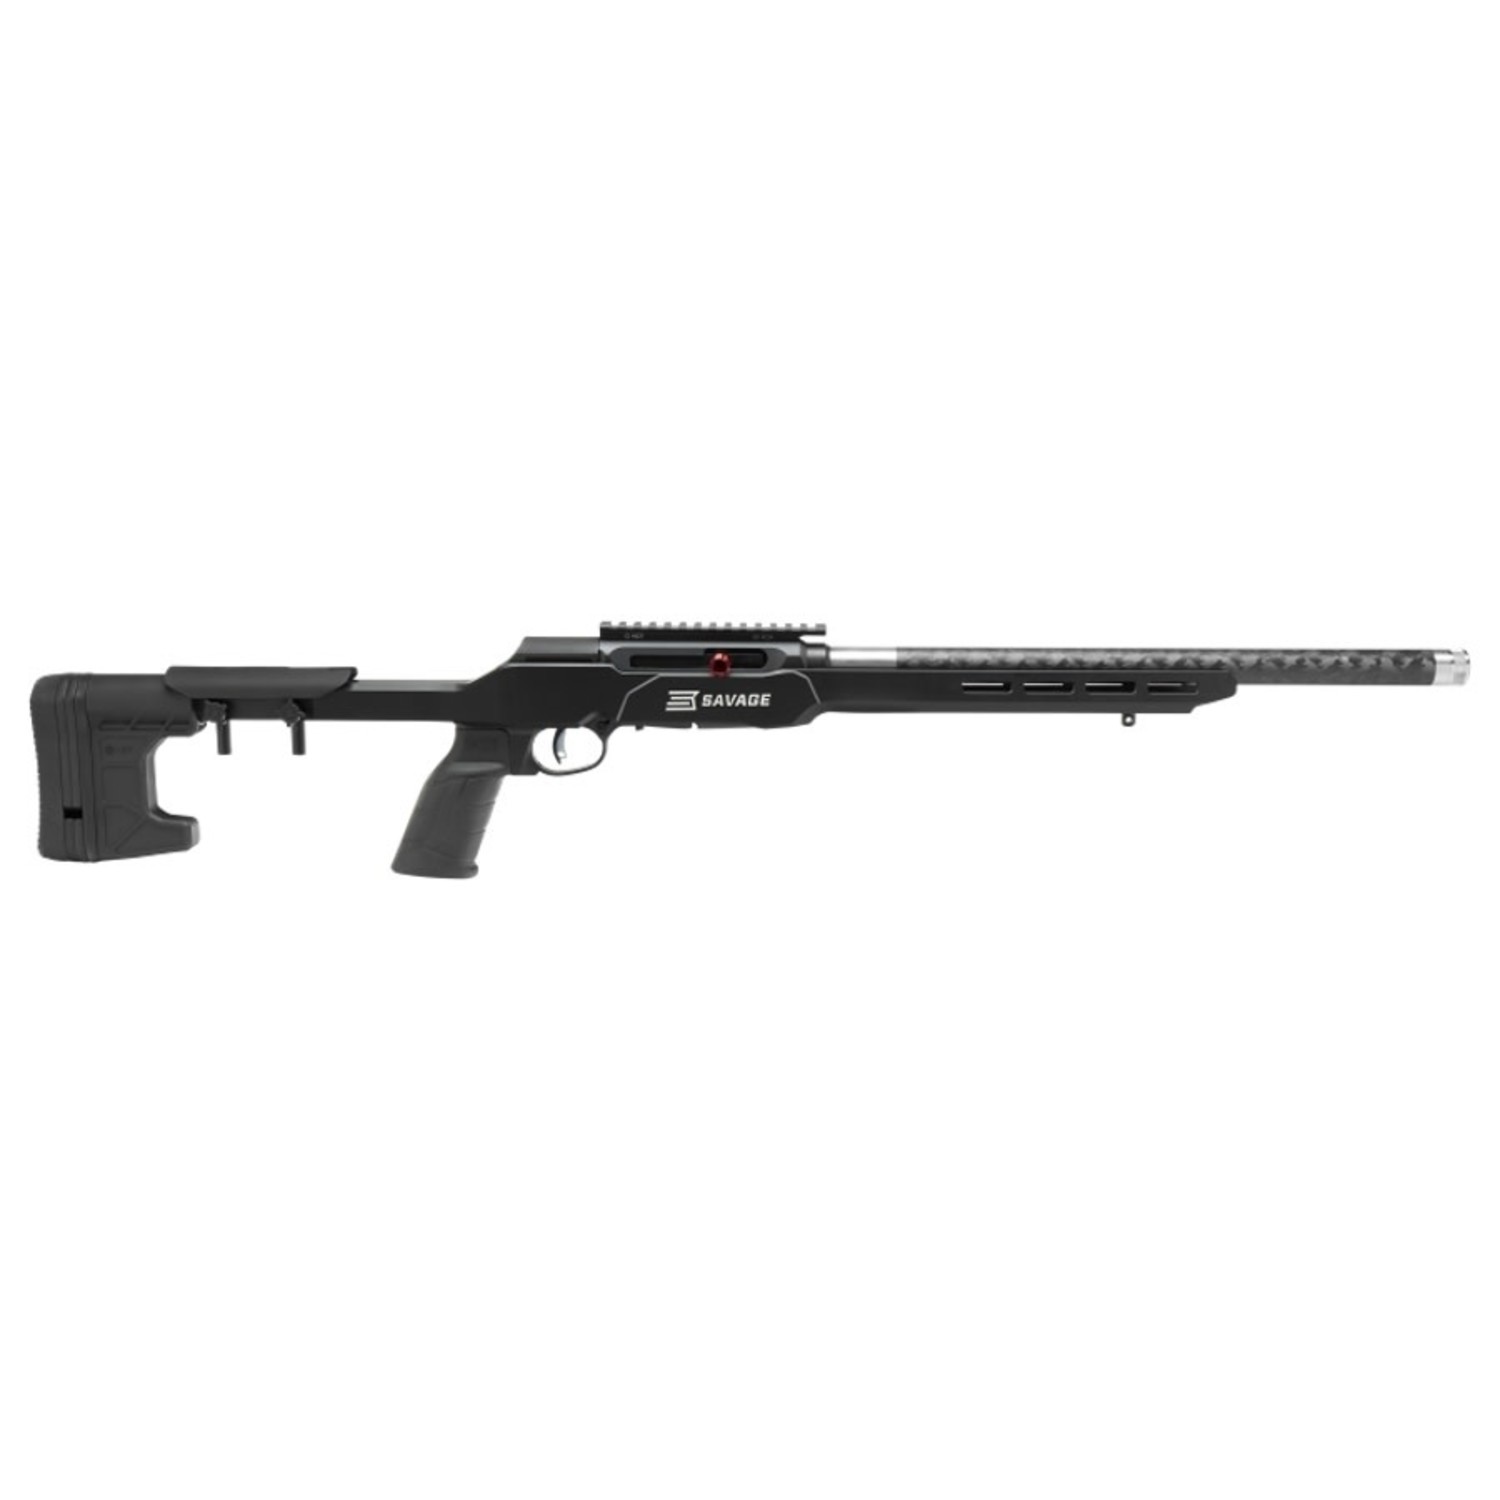 Savage 47256 A22 Precision Lite Semi-Auto Rifle, 22 LR, 18" Bbl, Carbon Fiber Wrap Stainless Steel, Adj. Stock, 10+1 Rnd, 0685-2491